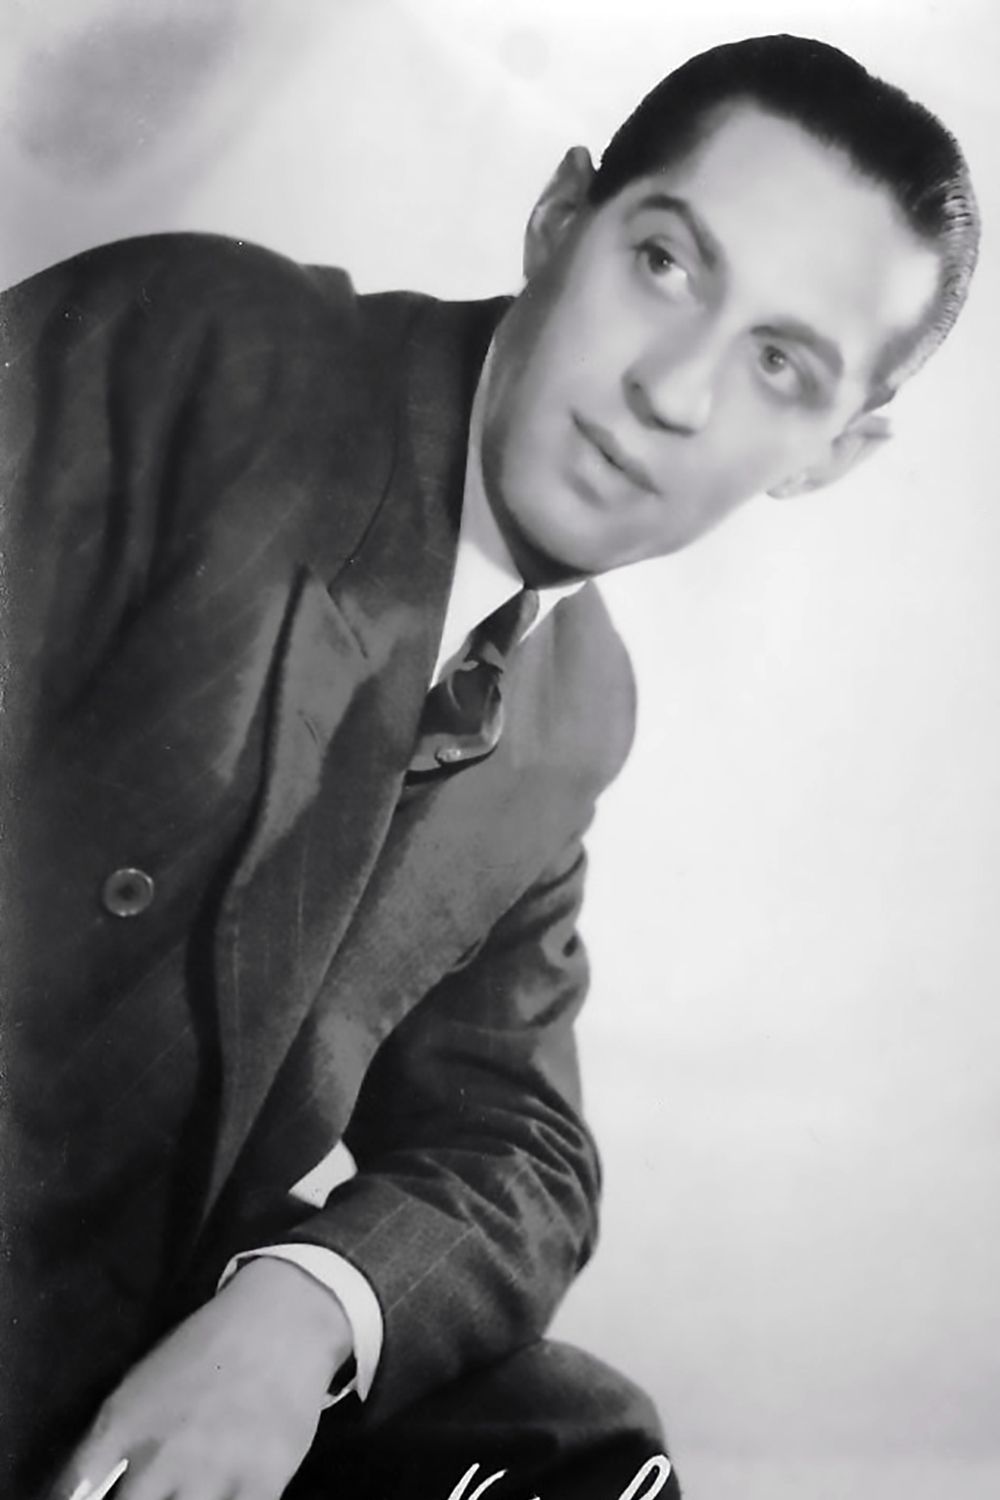 Francisco De Caro, Argentine Tango pianist and composer.